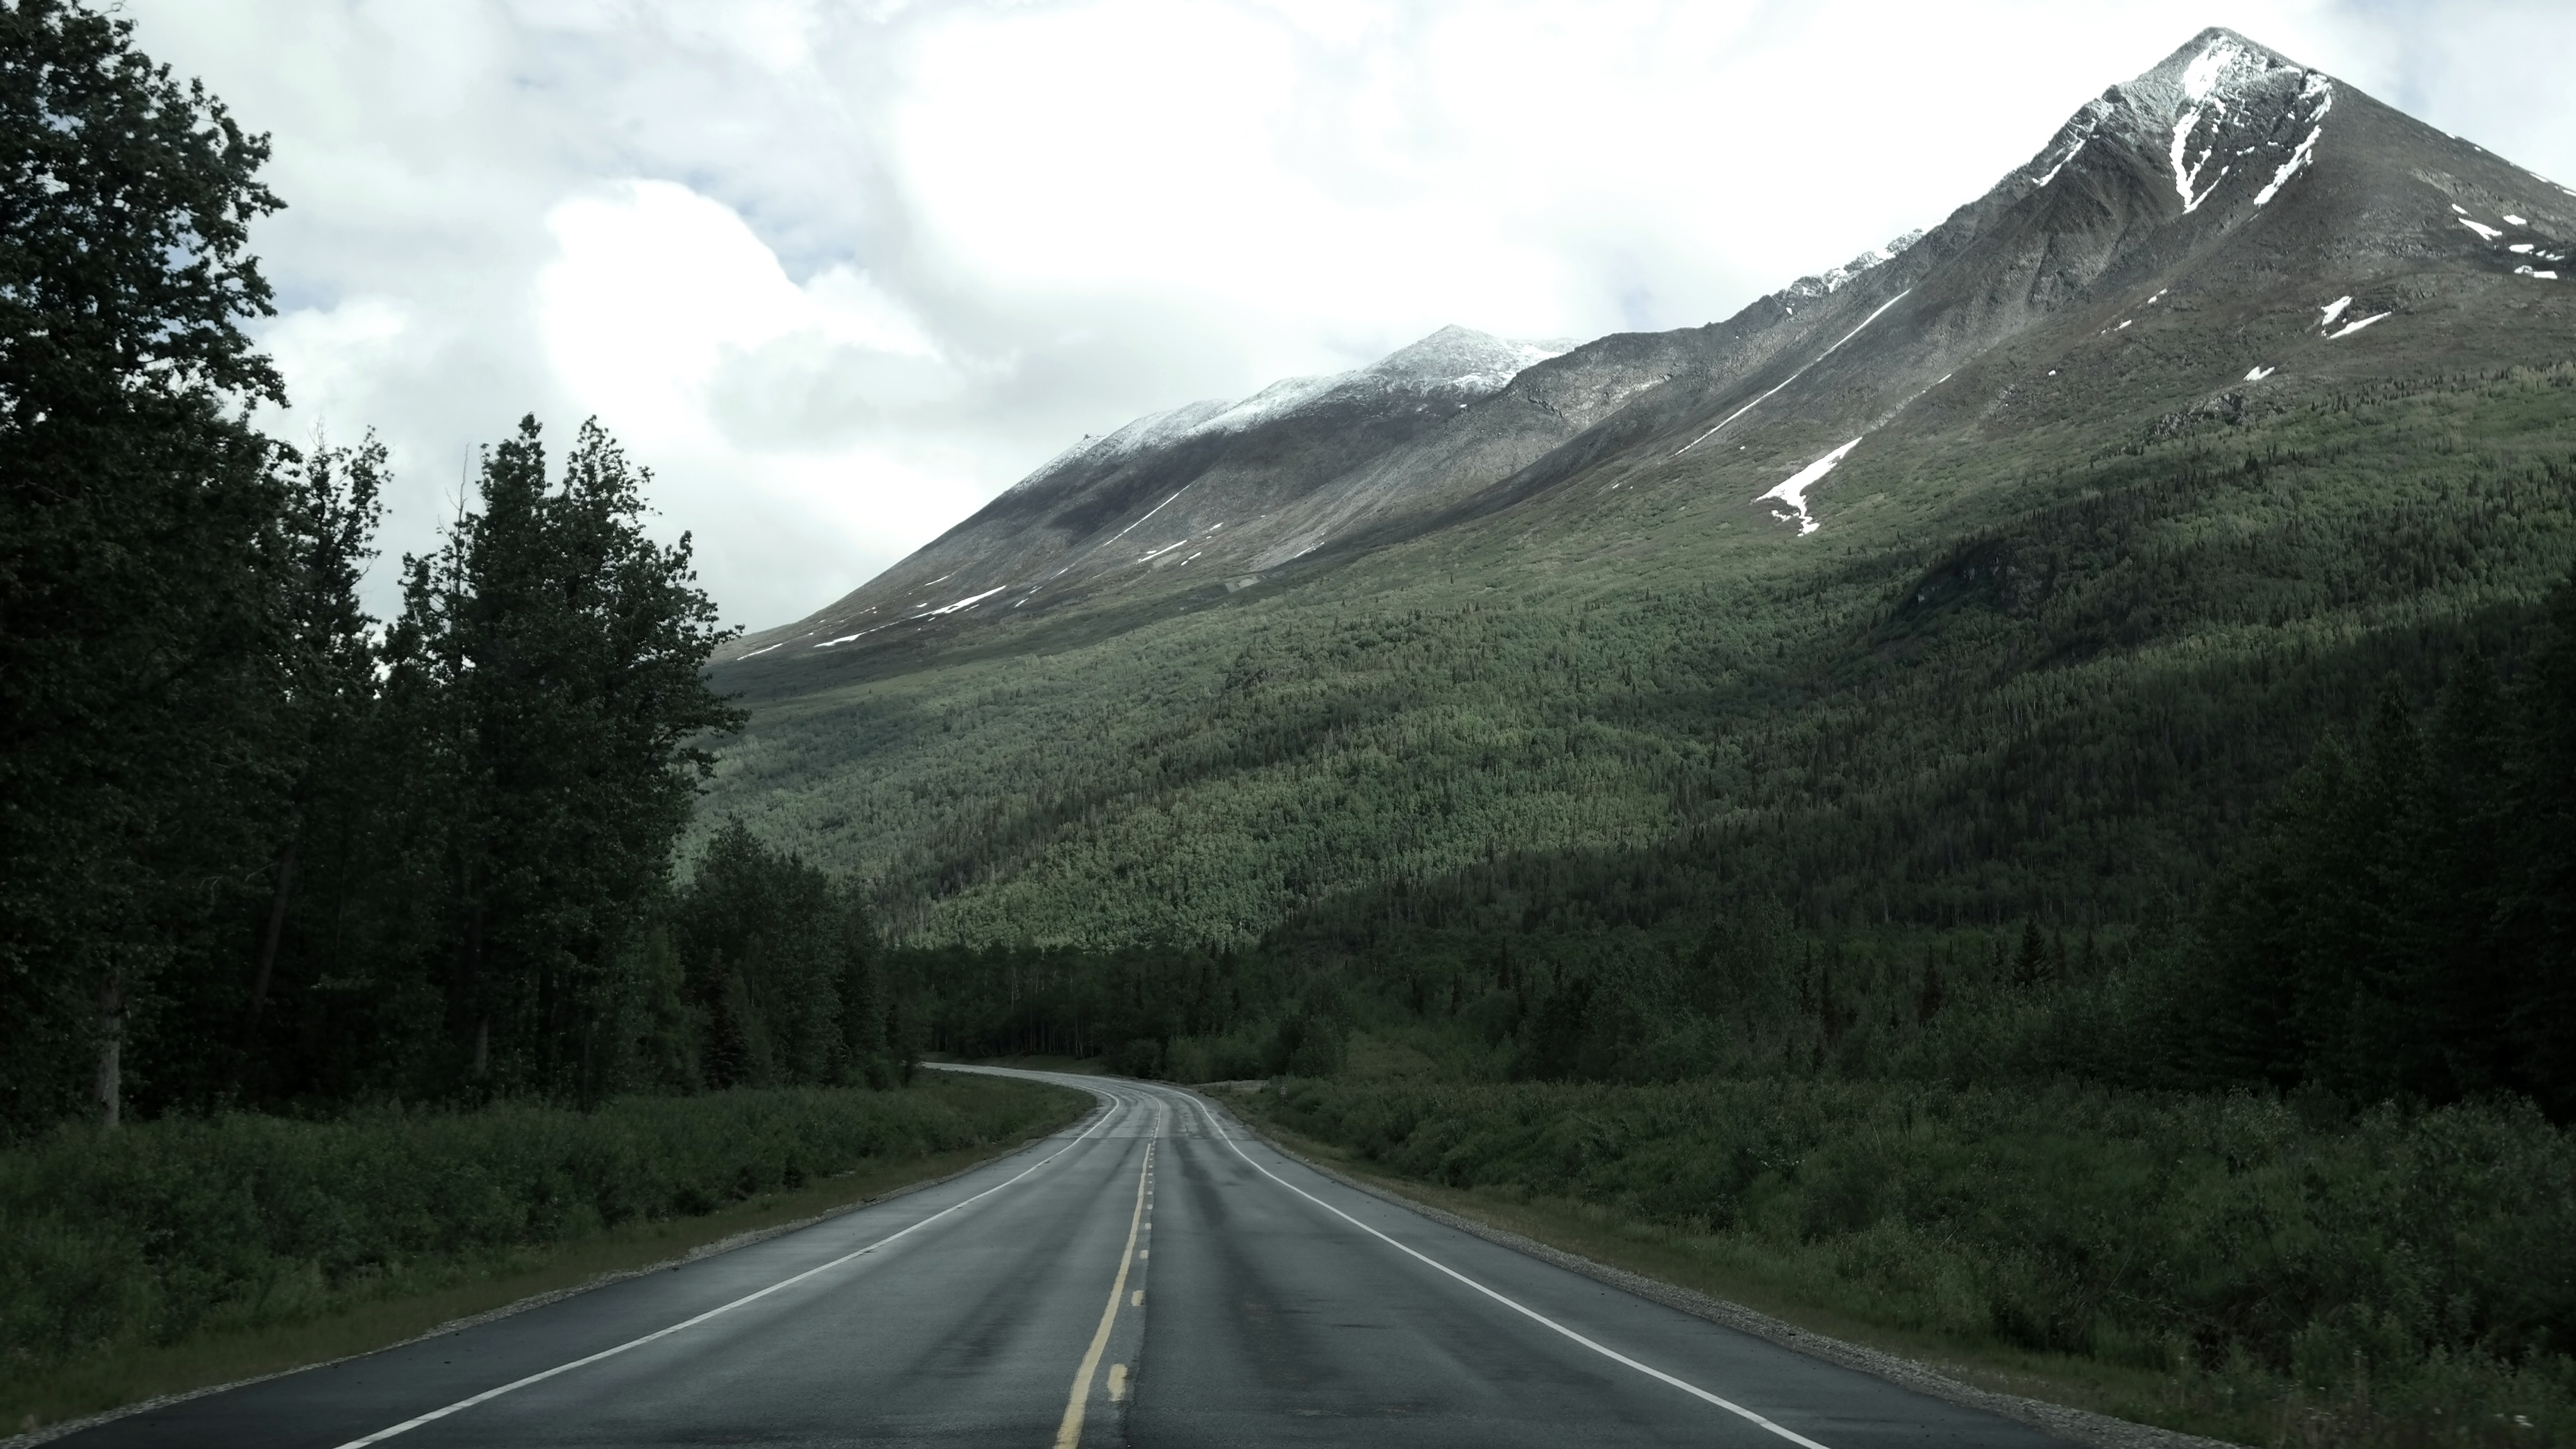 File:Road along Alaska mountains (Unsplash).jpg - Wikimedia Commons